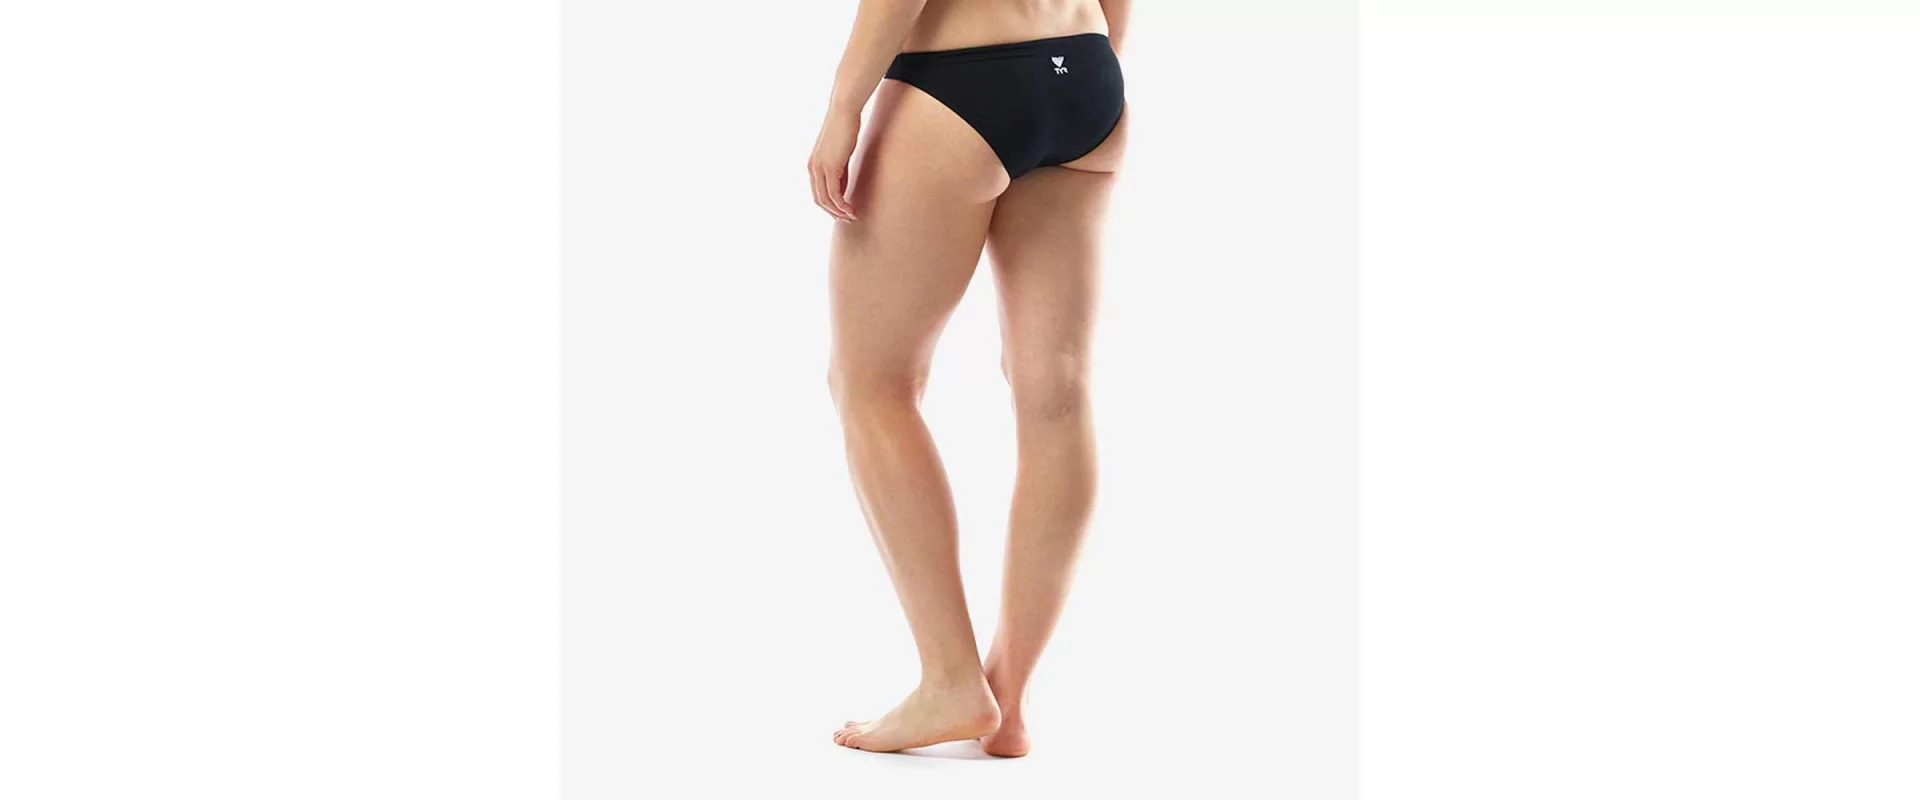 TYR Solid Classic Bikini Bottom / Женские плавки фото 3